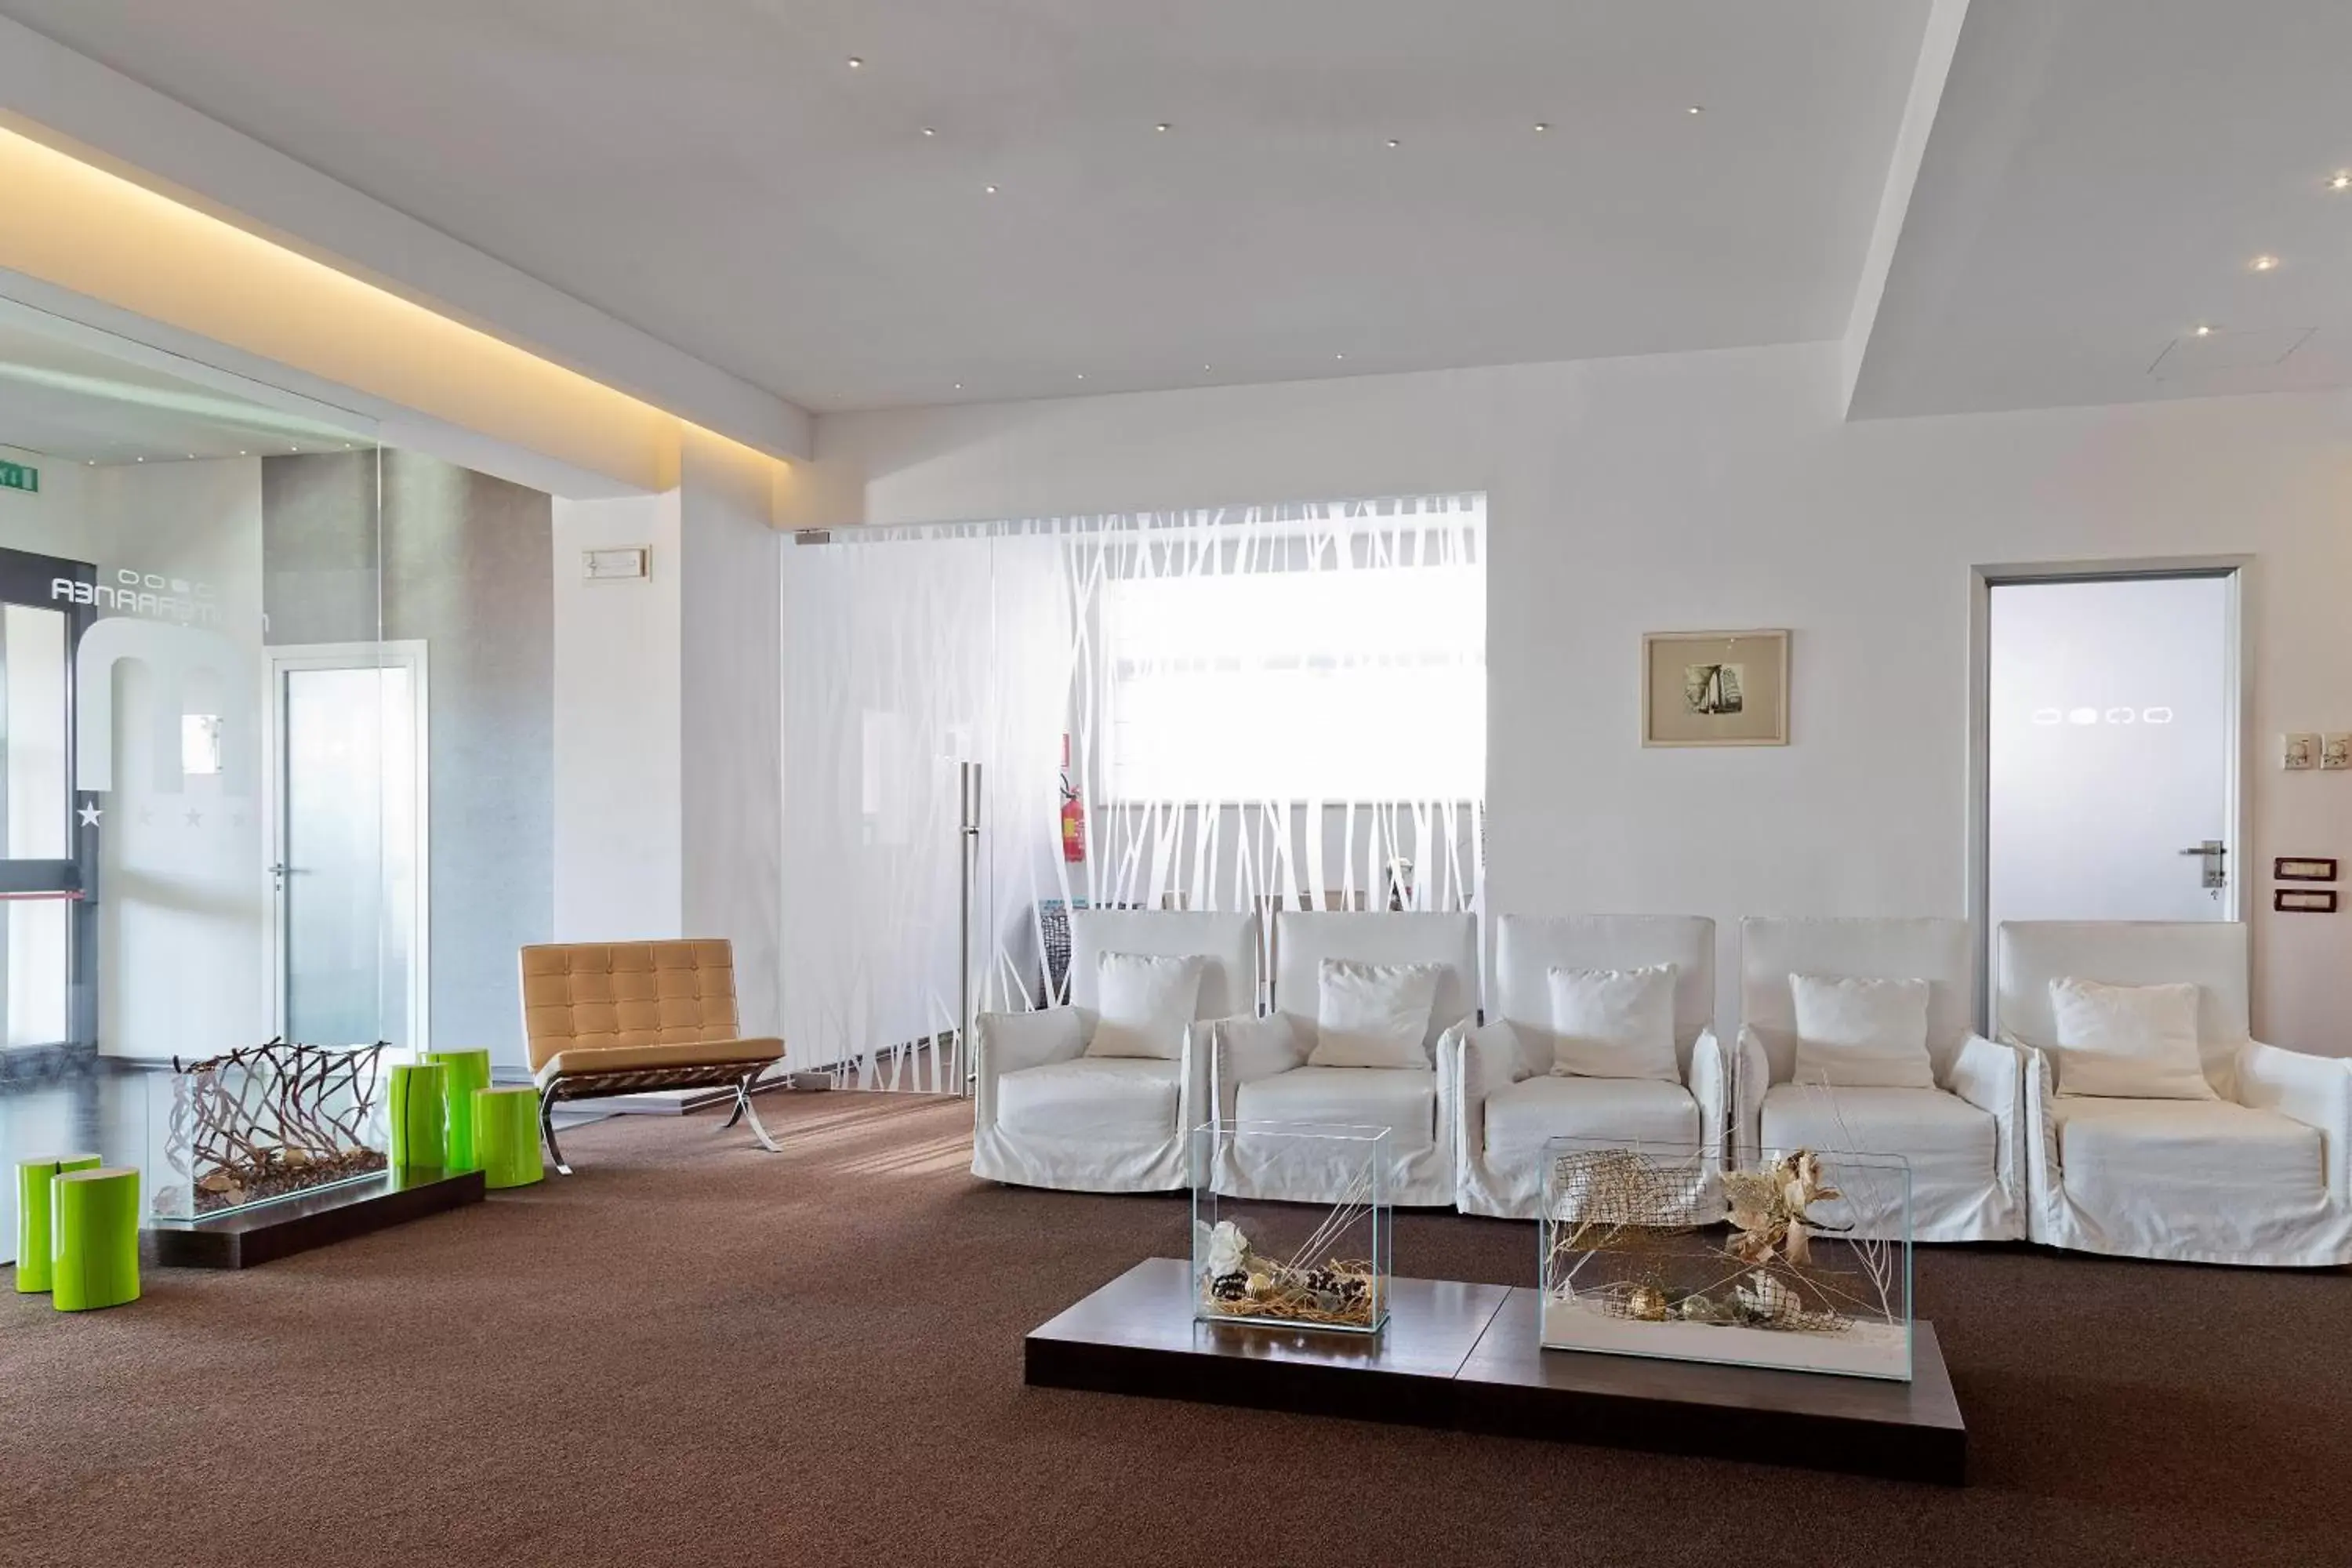 Lobby or reception in Mediterranea Hotel & Convention Center